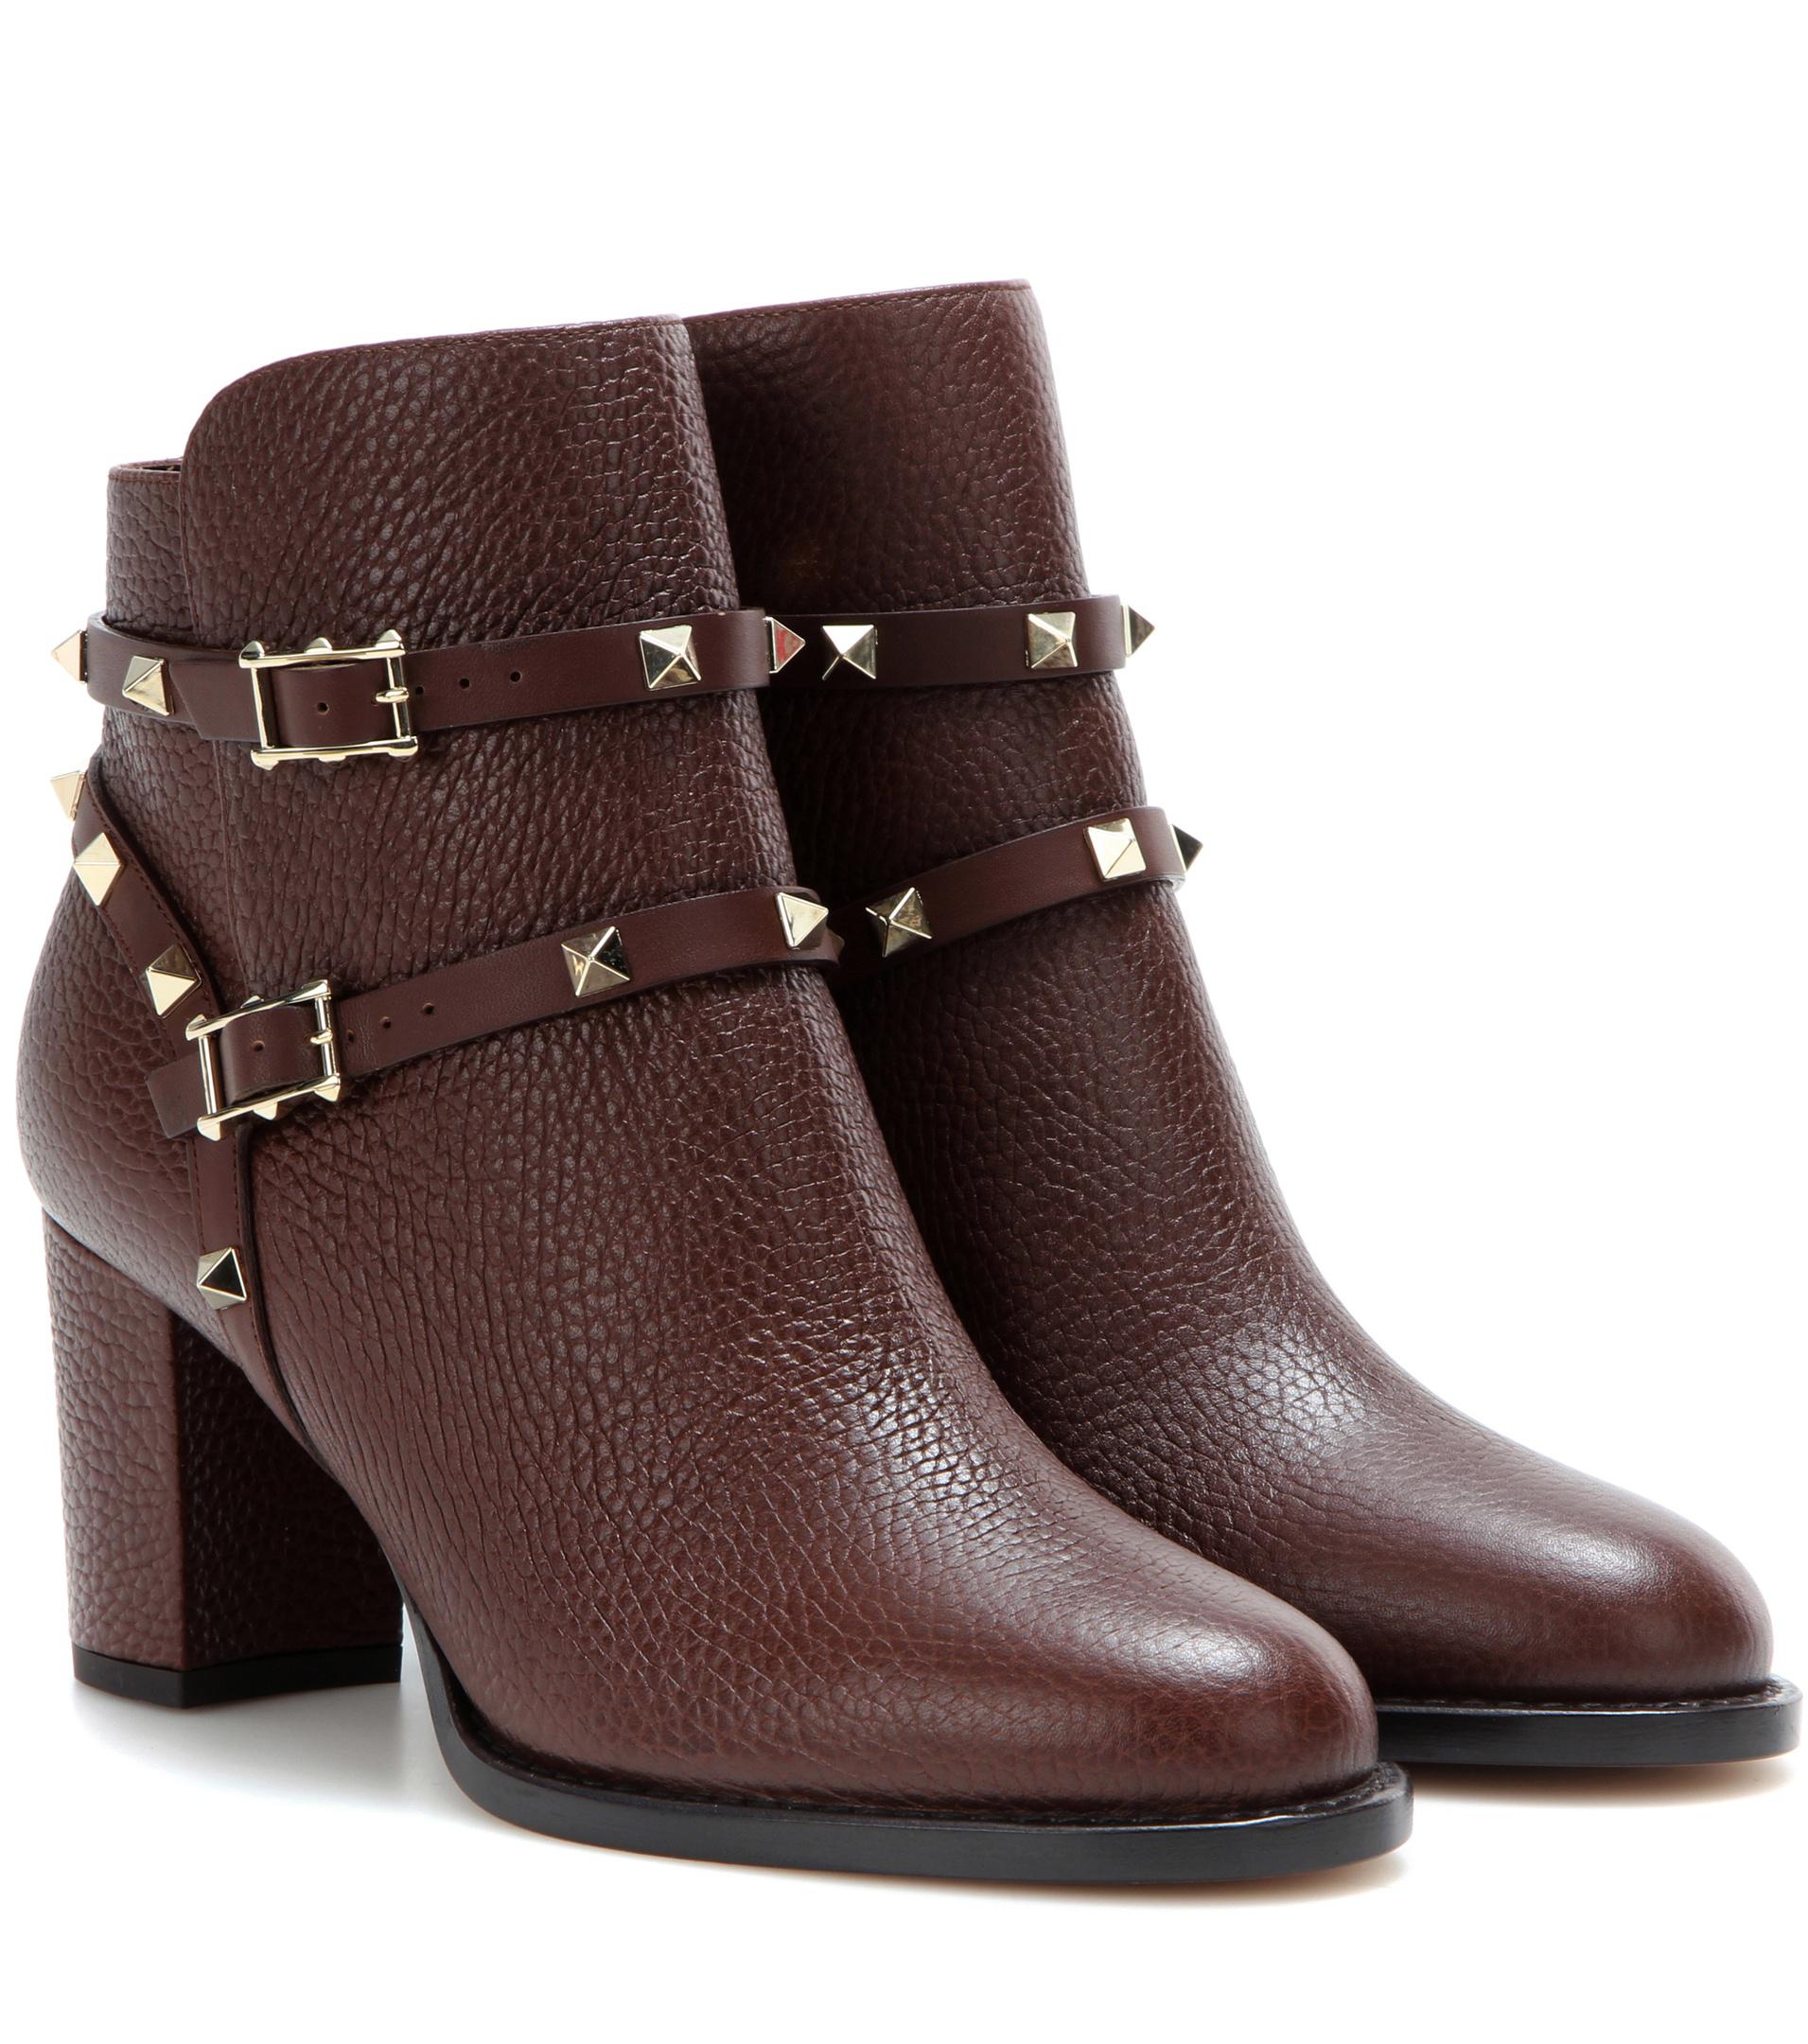 Lyst - Valentino Garavani Rockstud Leather Ankle Boots in Brown